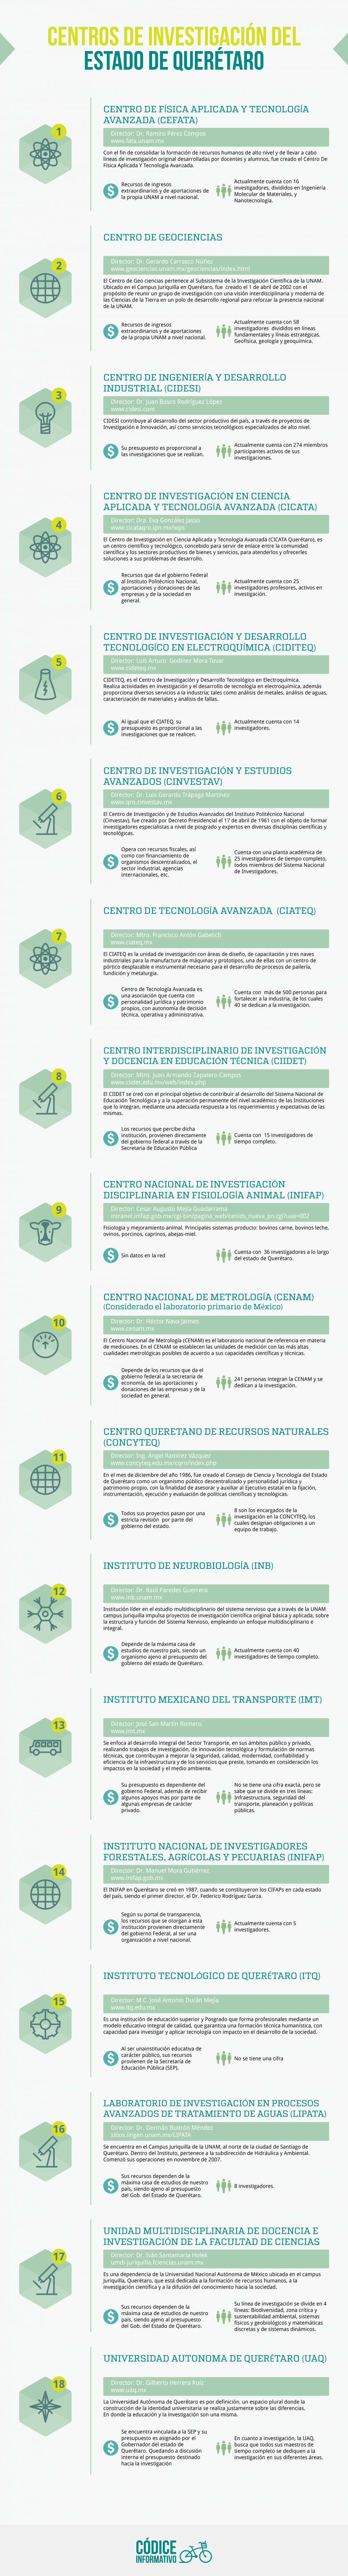 Codice_Infografia_Centros_Investigacion_V01MAX-01